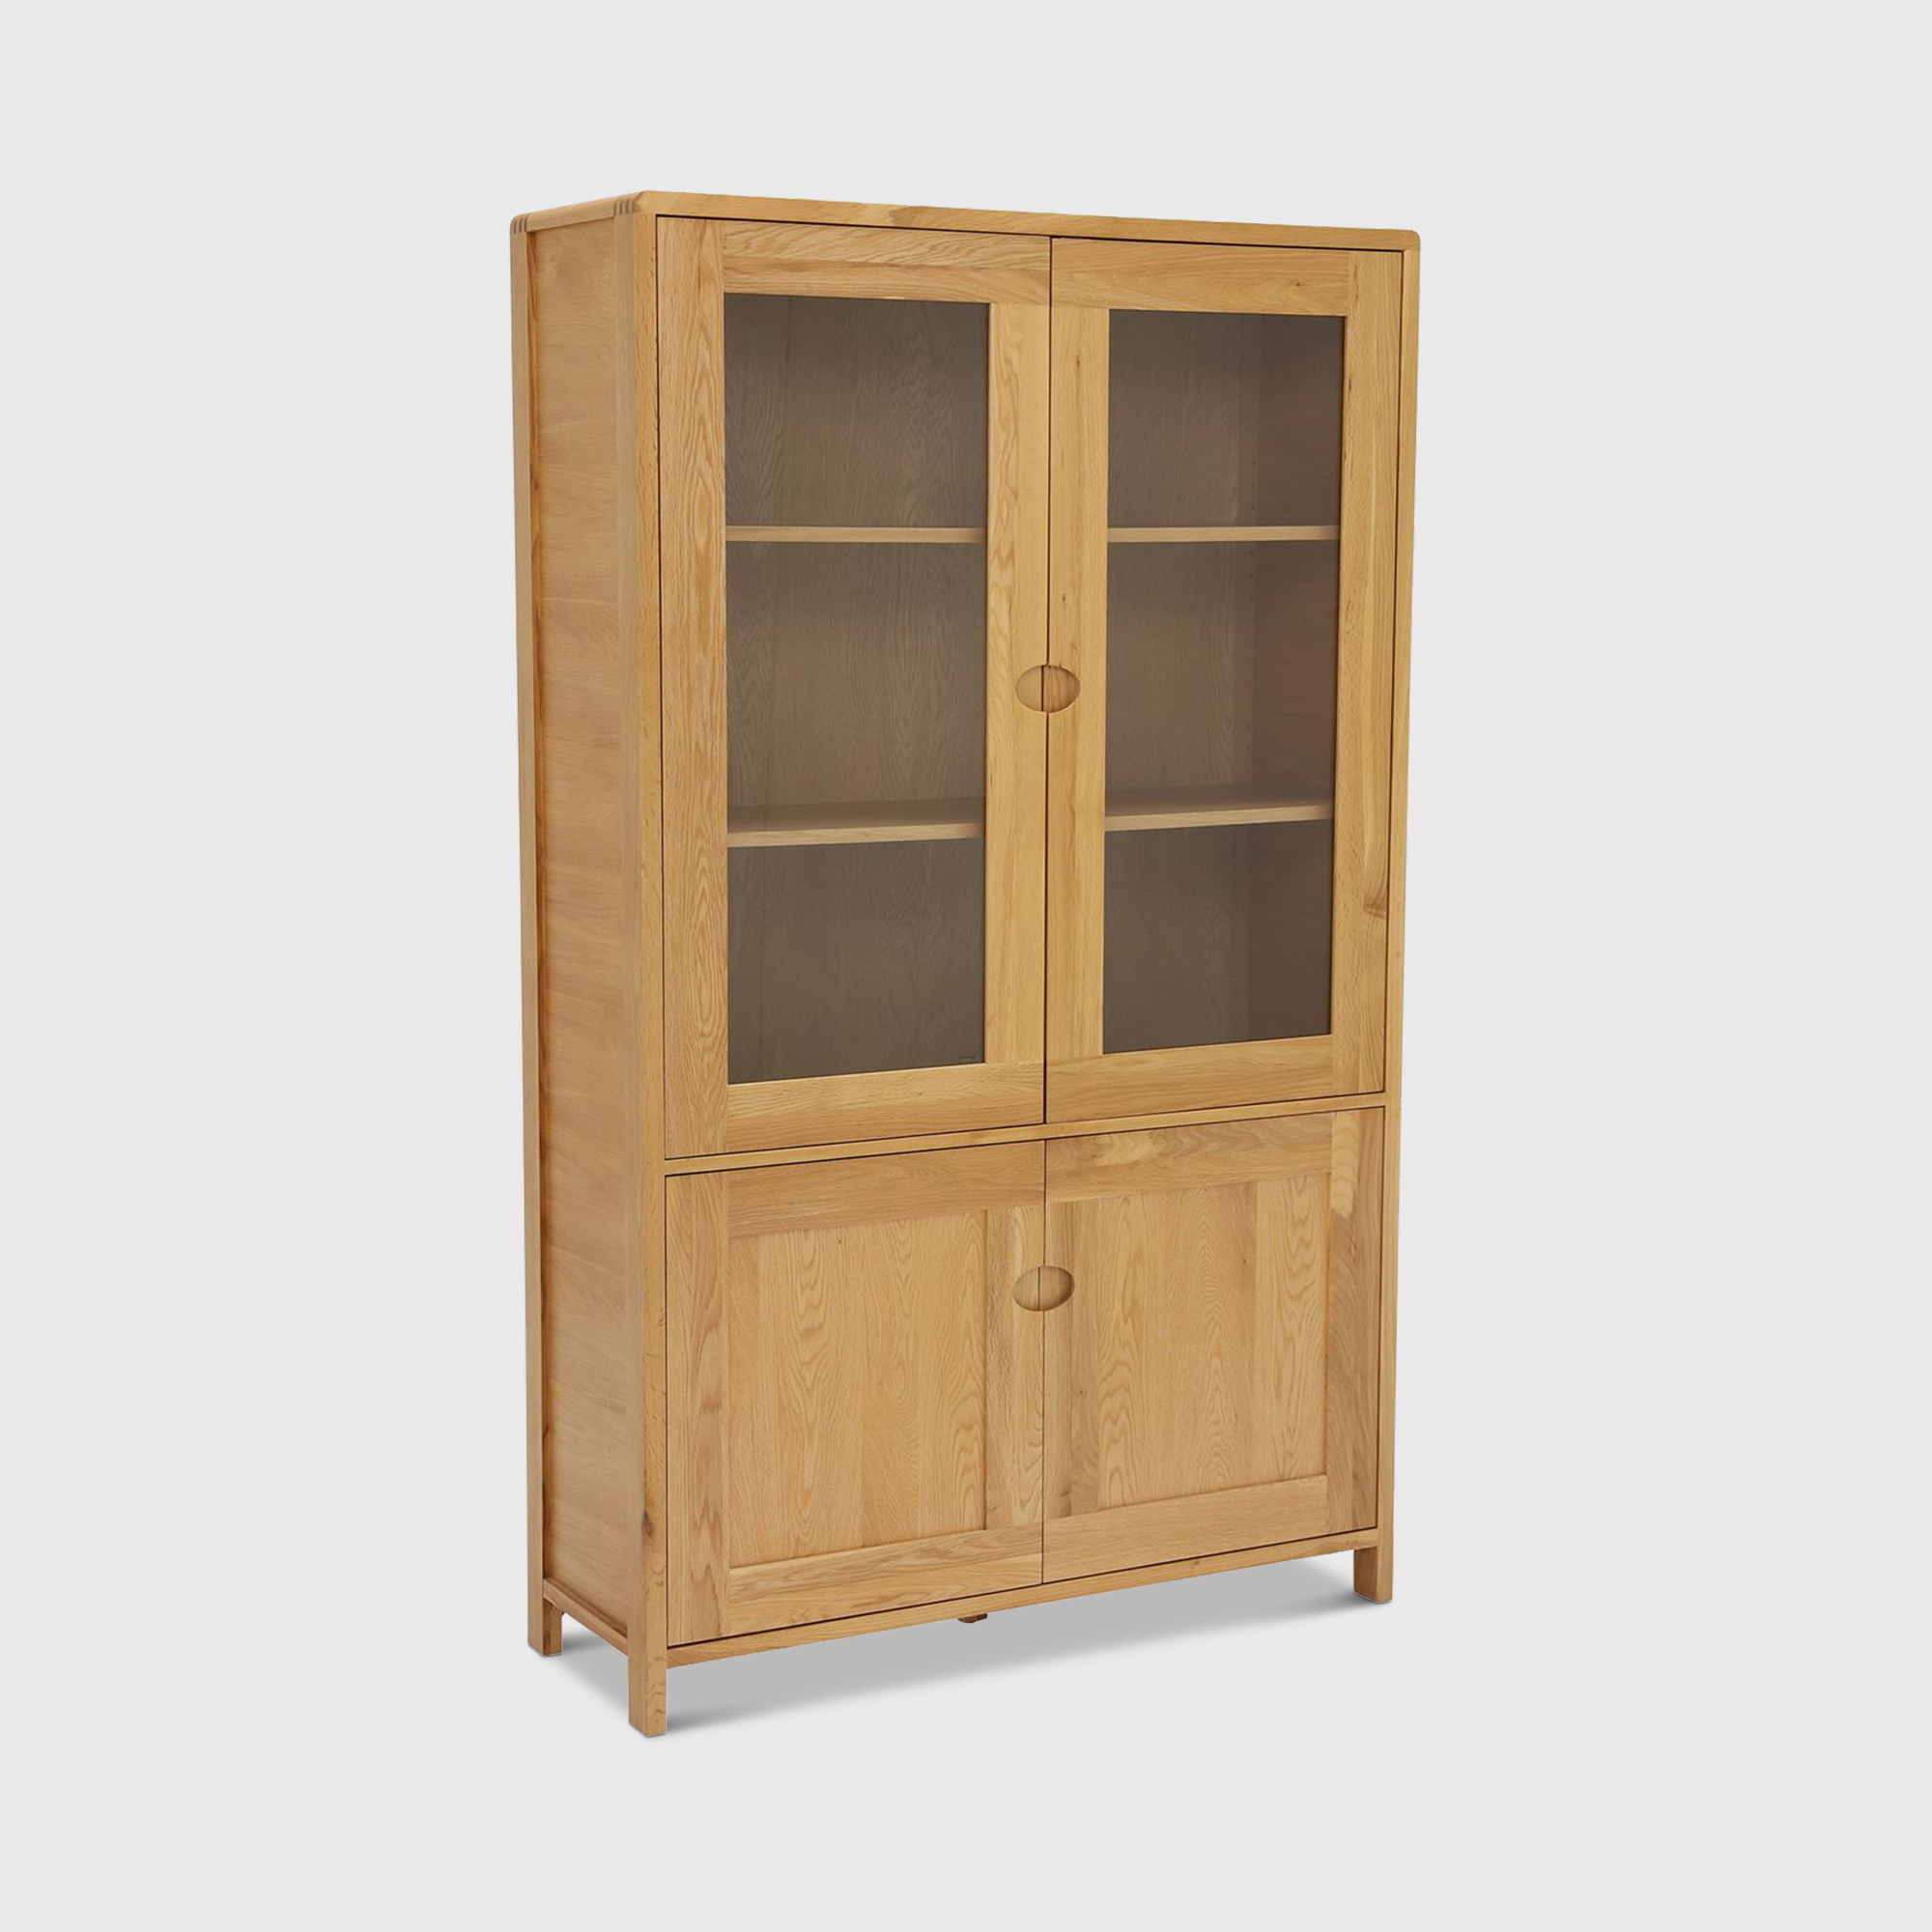 Ercol Bosco Display Cabinet, Neutral | Barker & Stonehouse